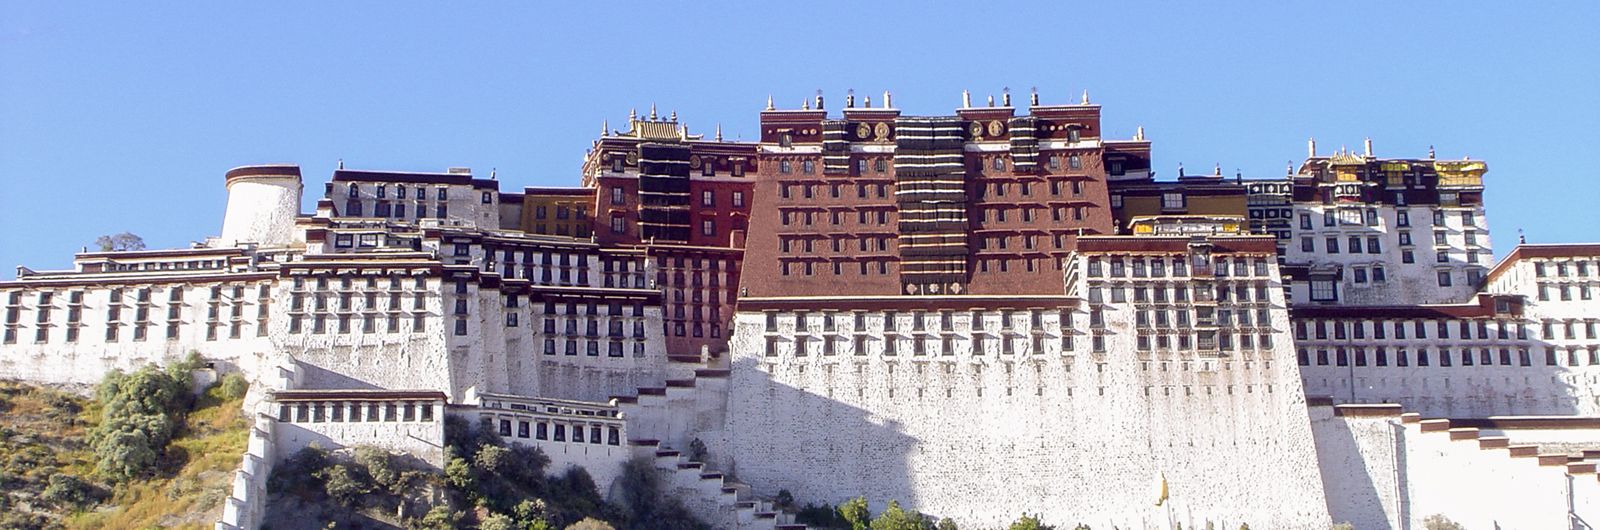 Tibet. Lhasa